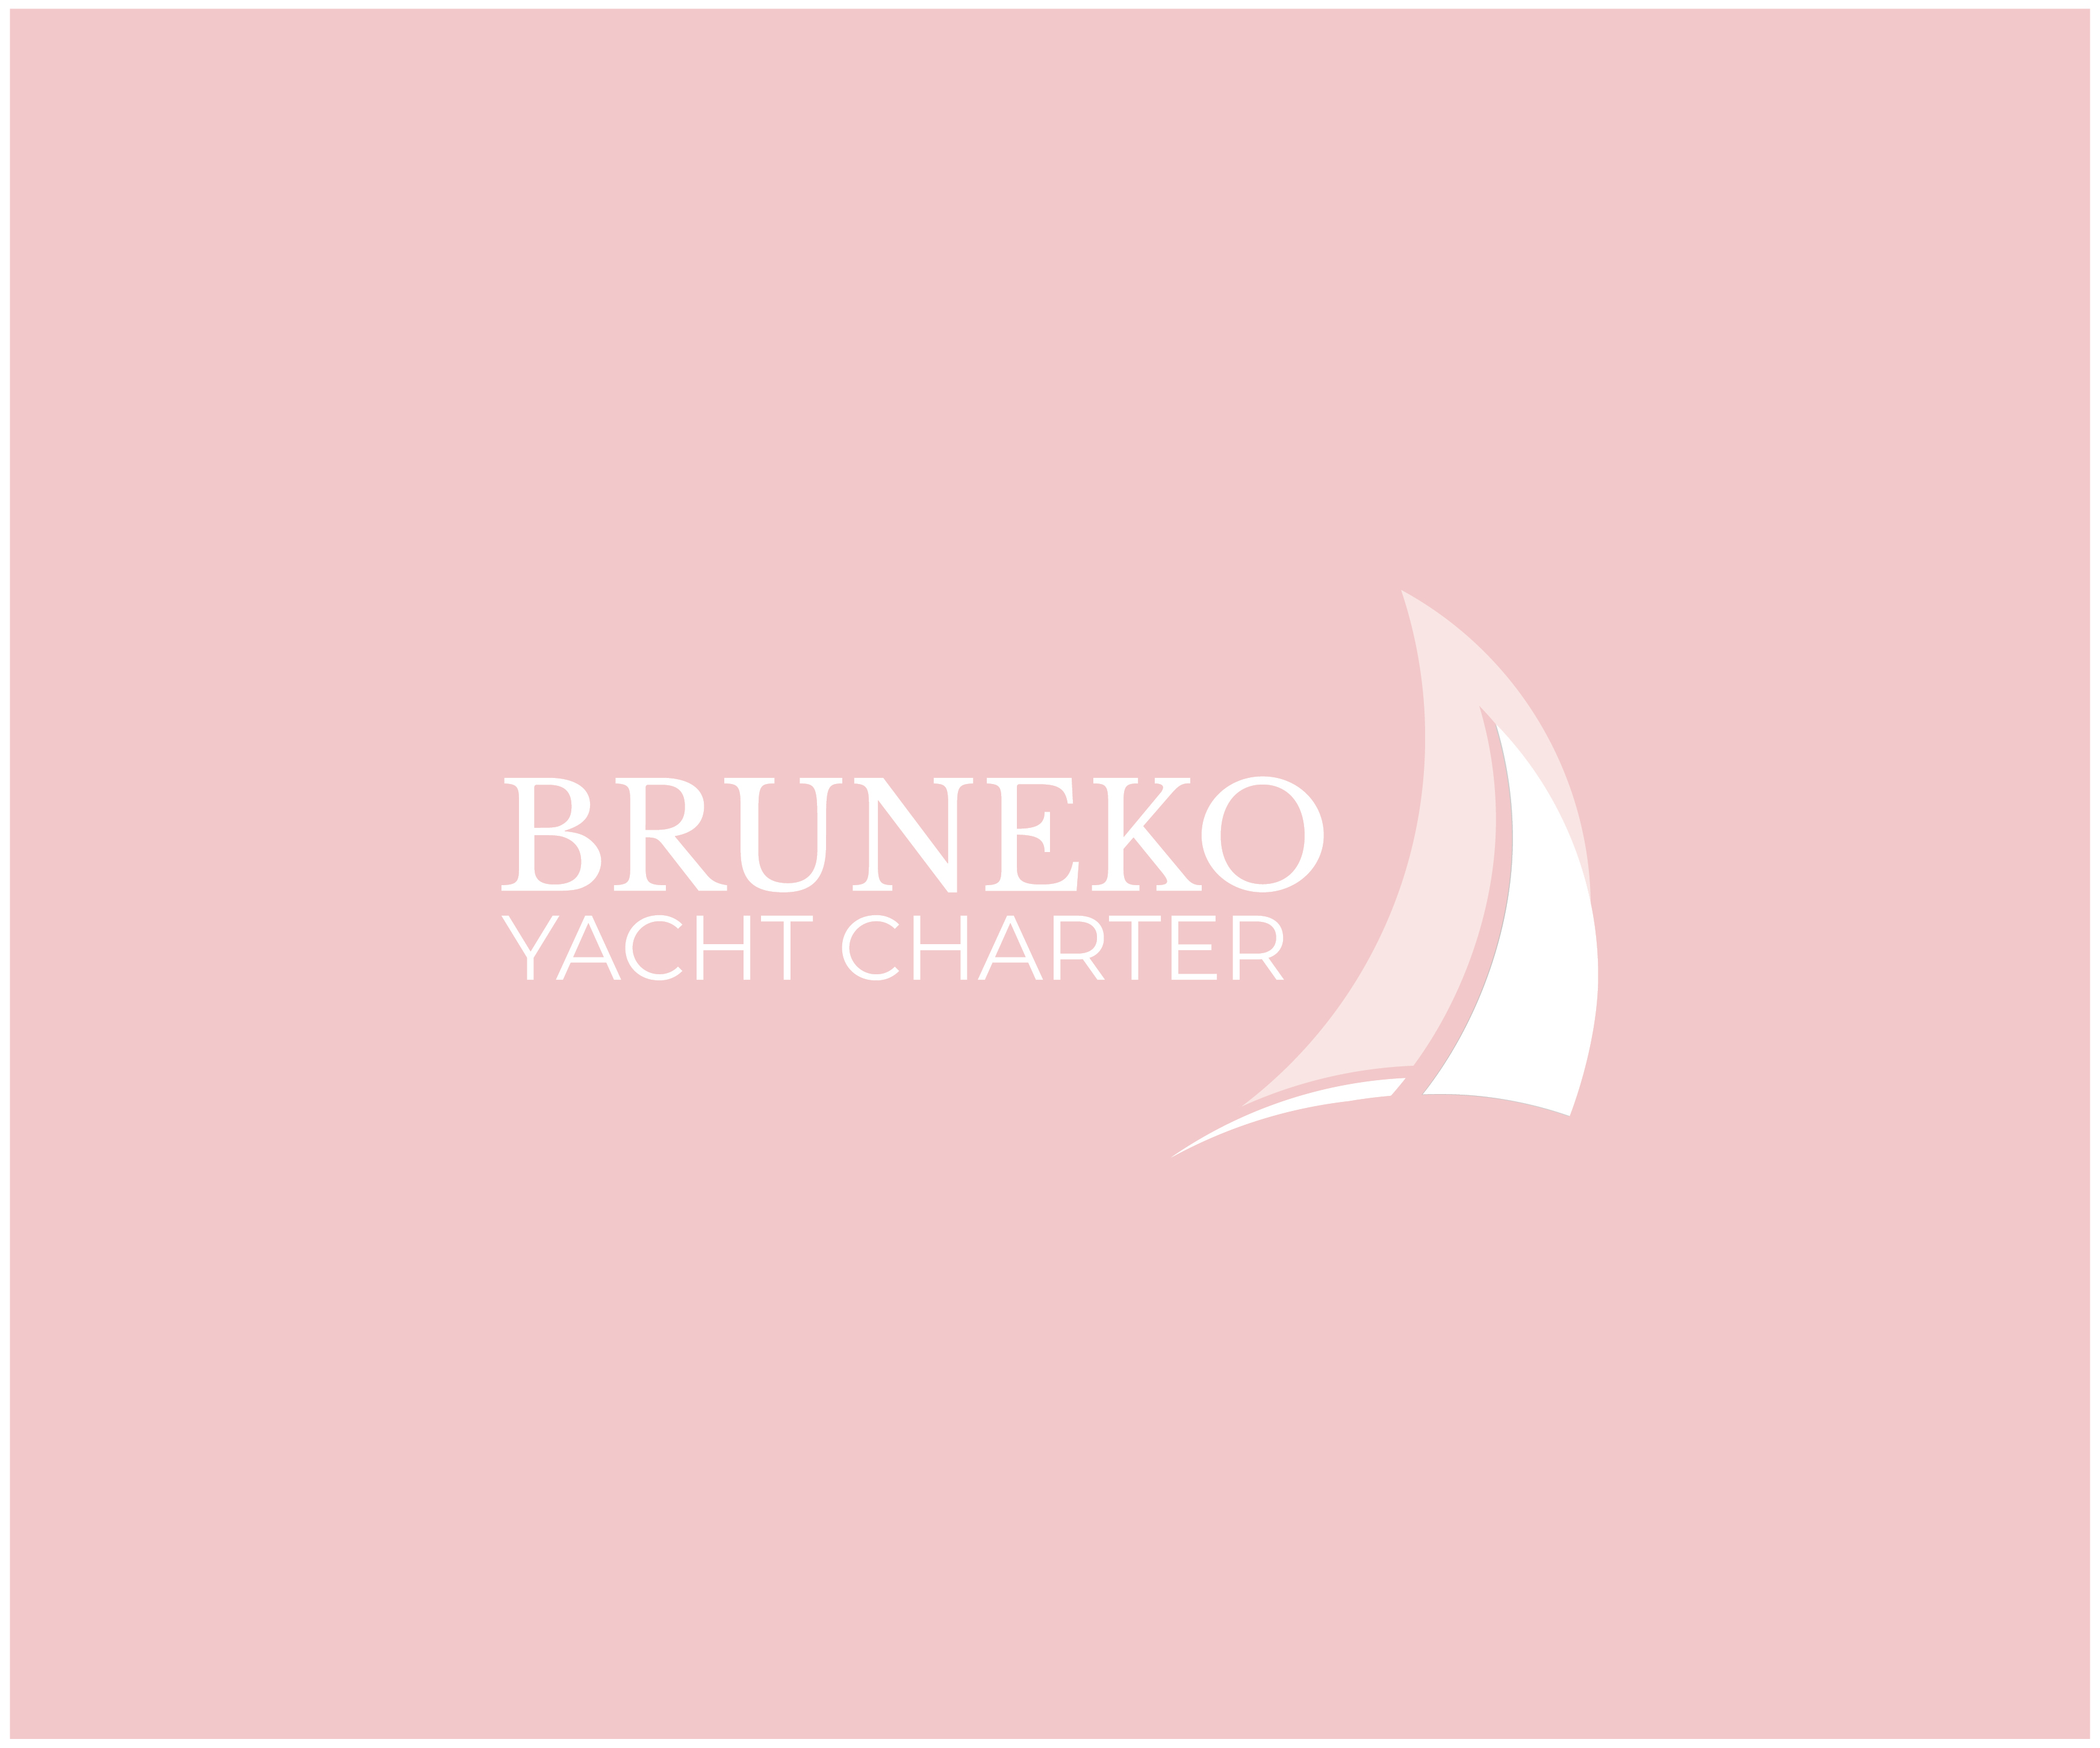 Bruneko Charter - The Exceptional Success of Luka Modrić and the Croatian National Football Team